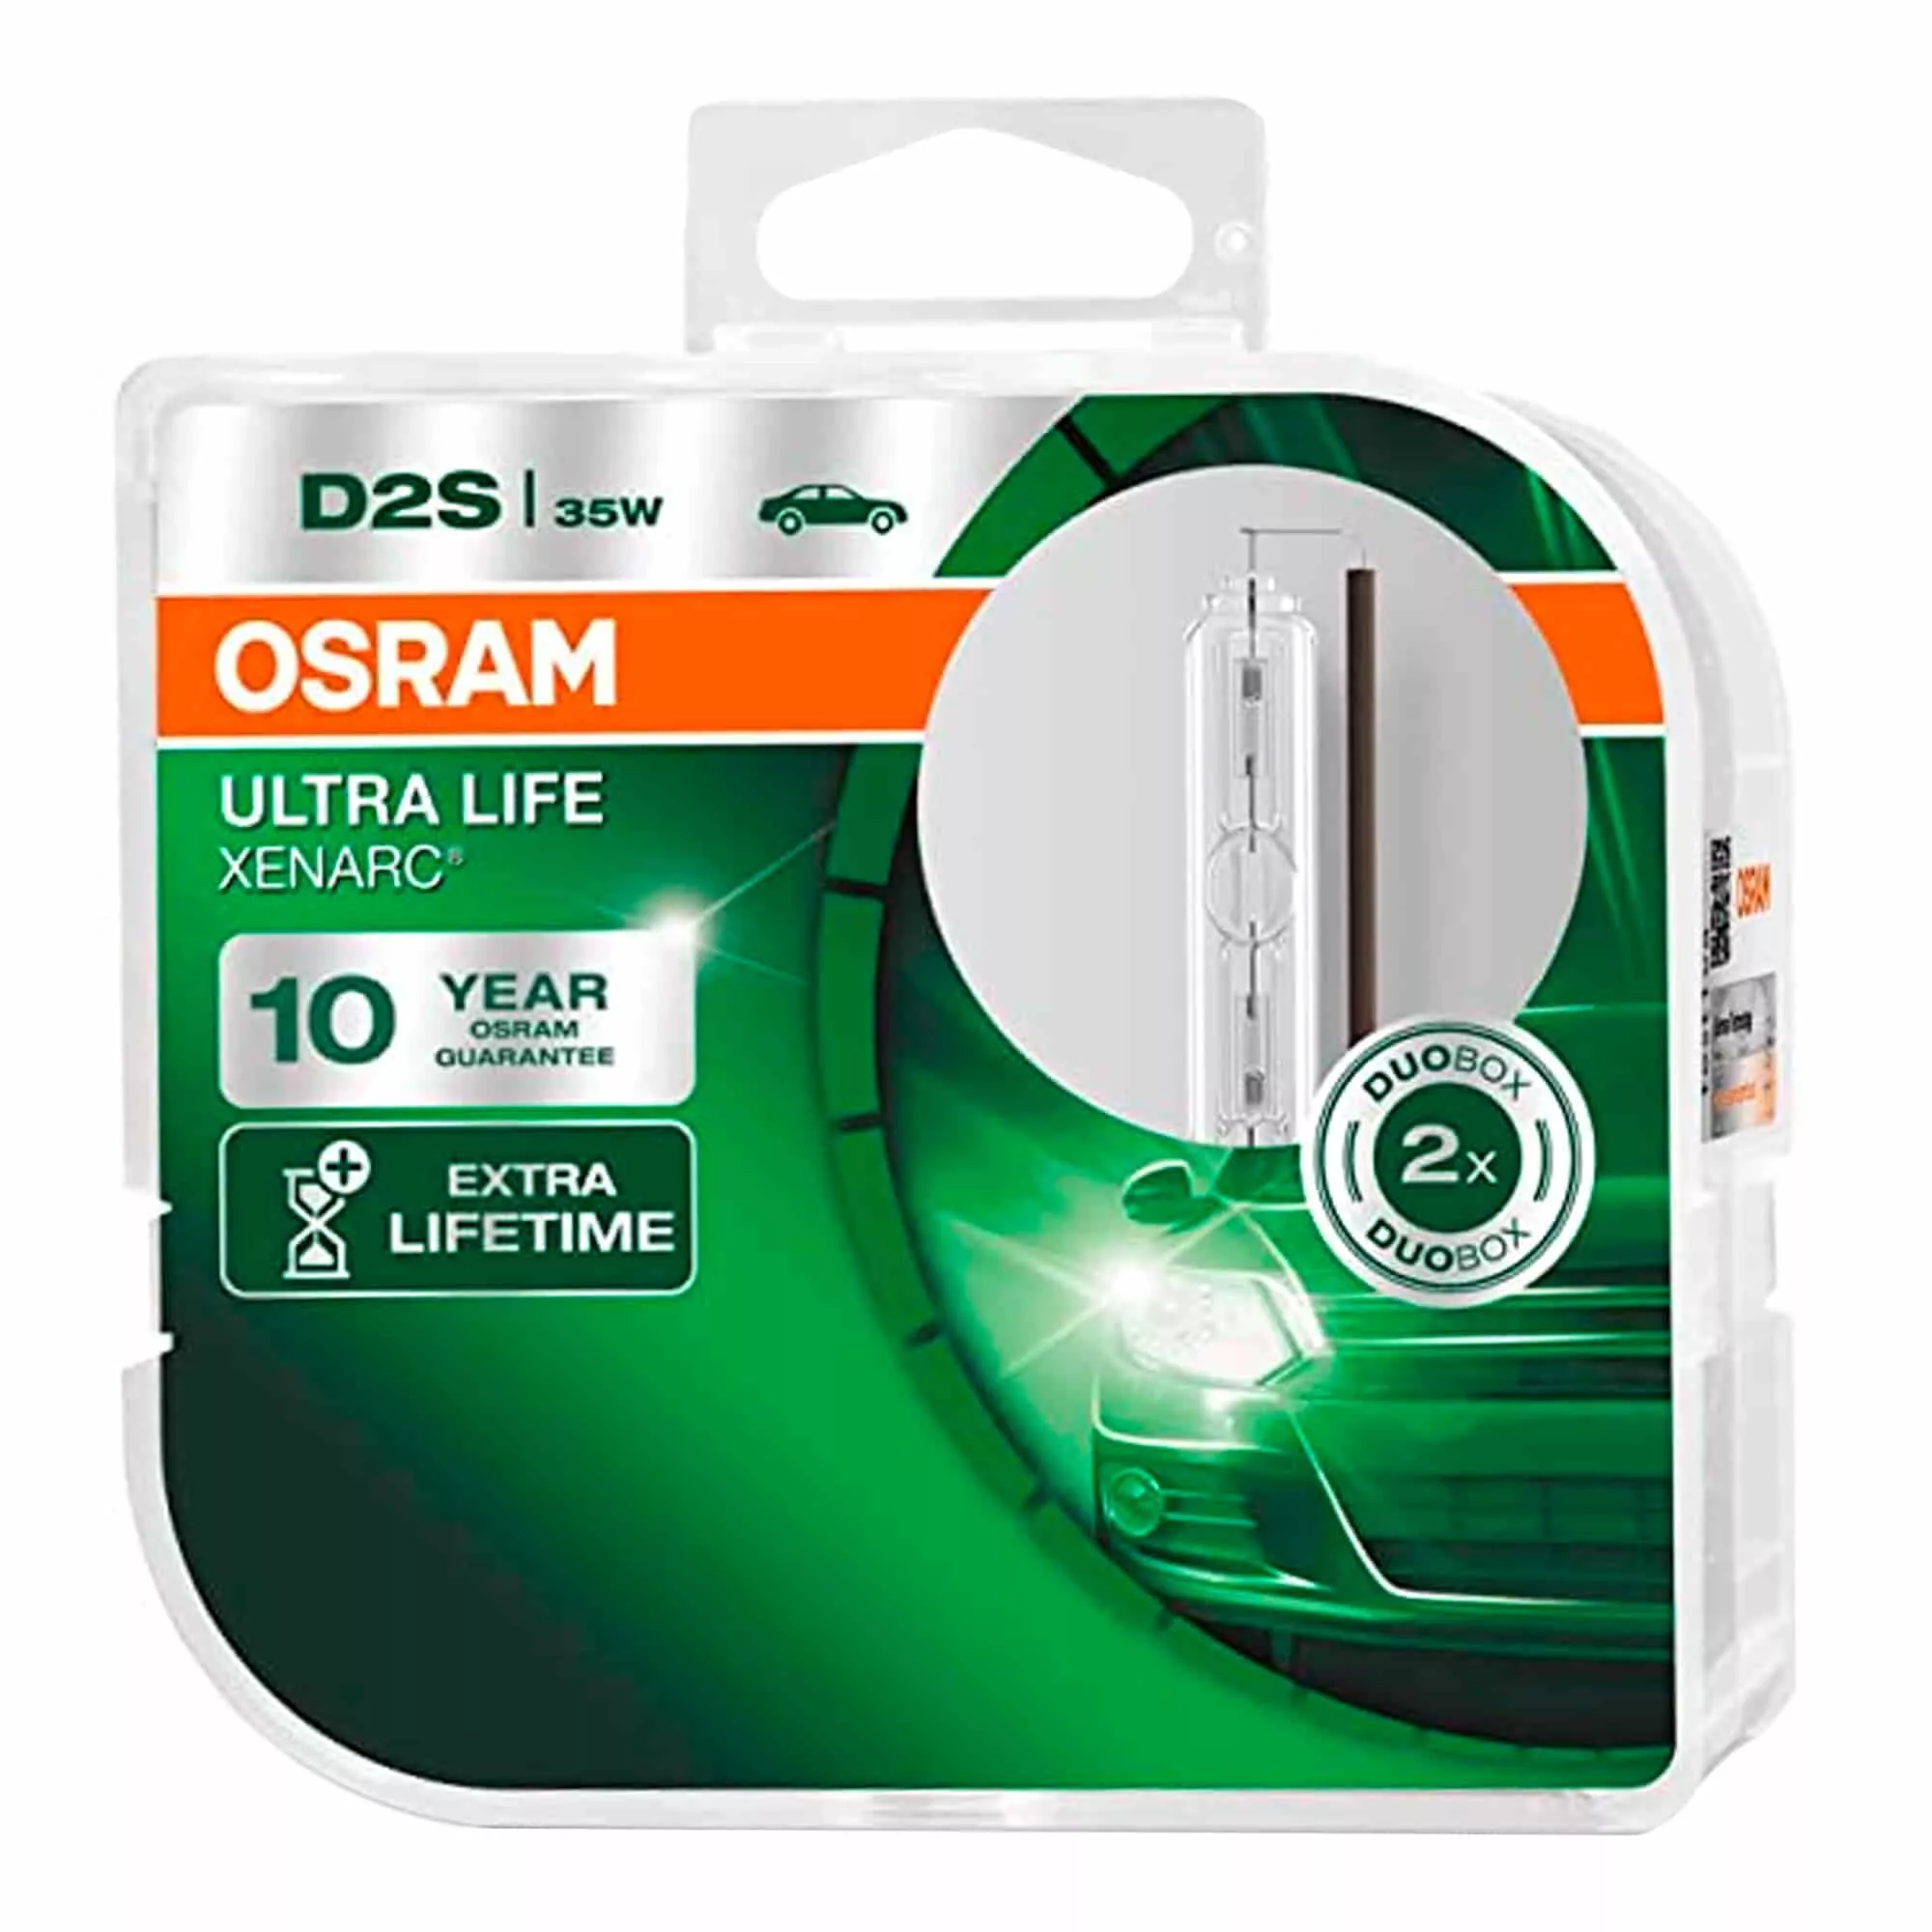 Лампа Osram Xenarc Ultra Life D2S 85V 35W 66240ult